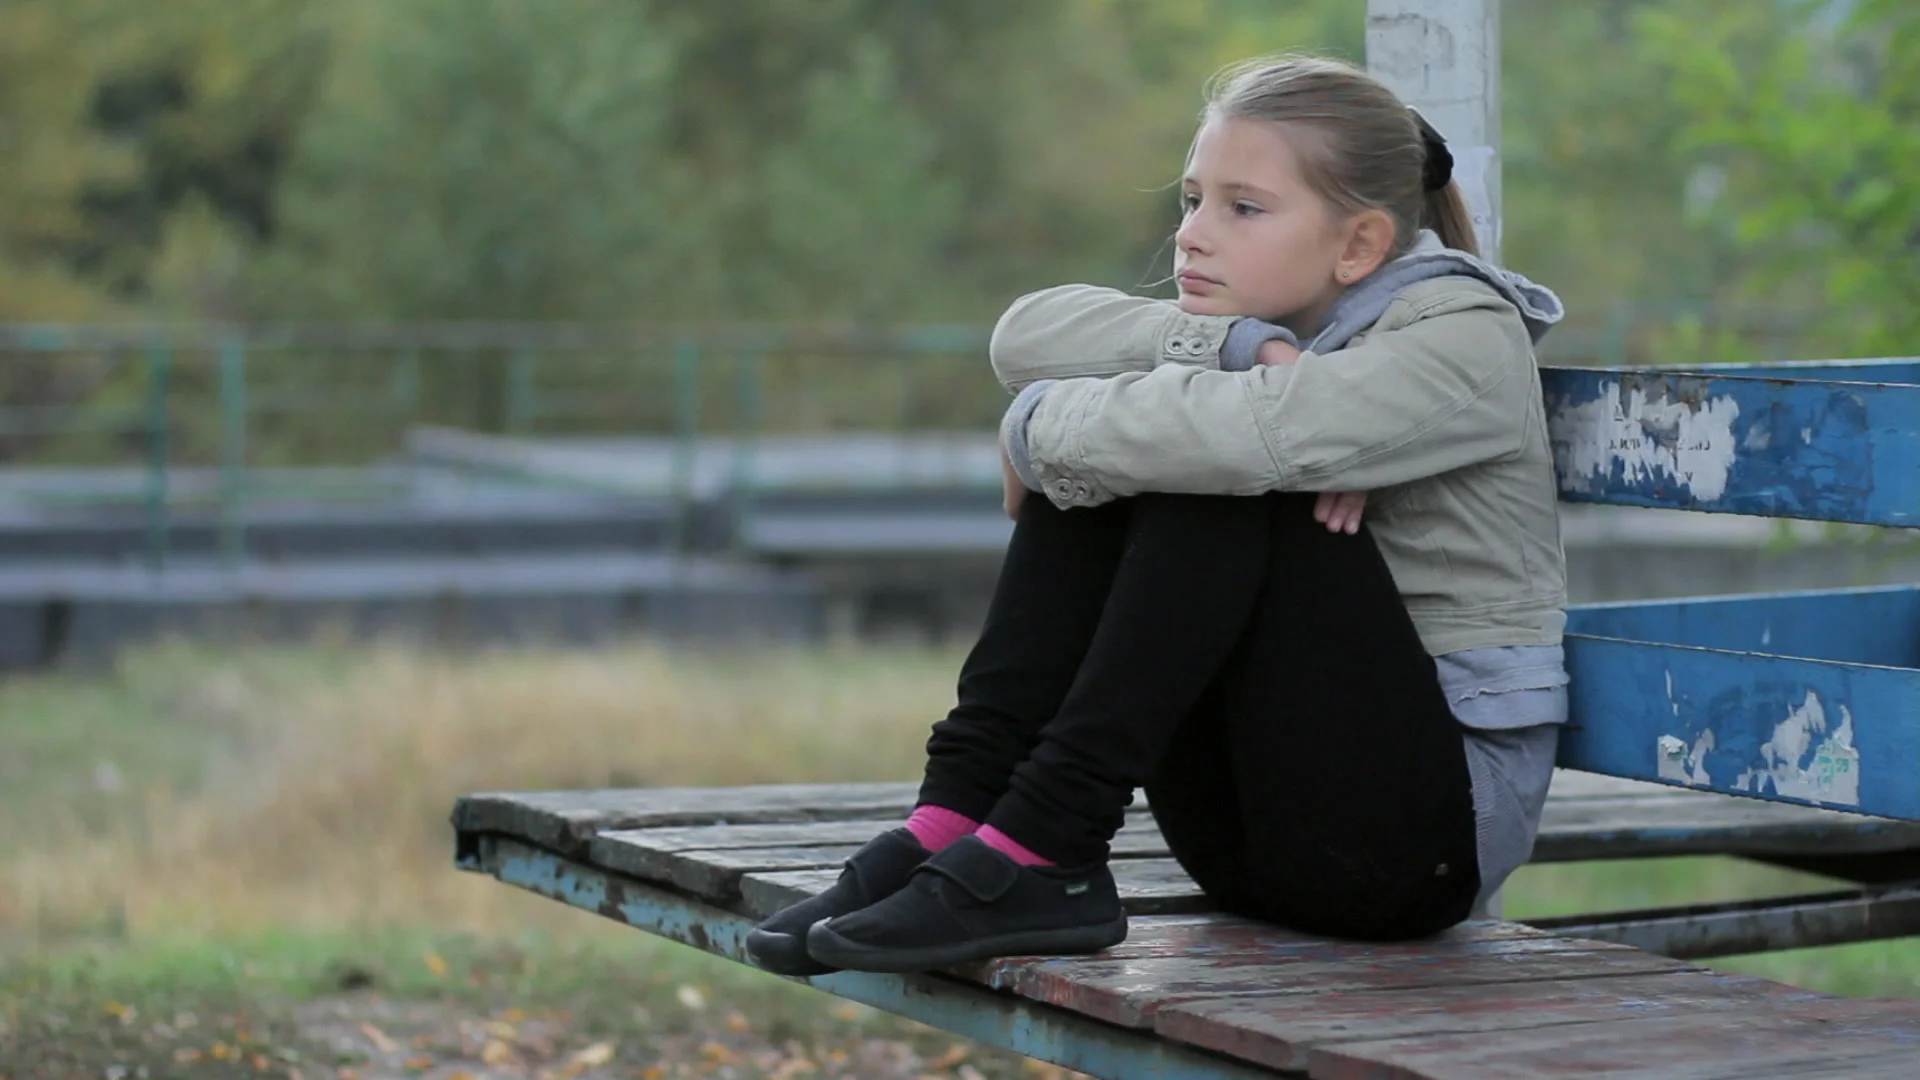 sad little girl sitting alone